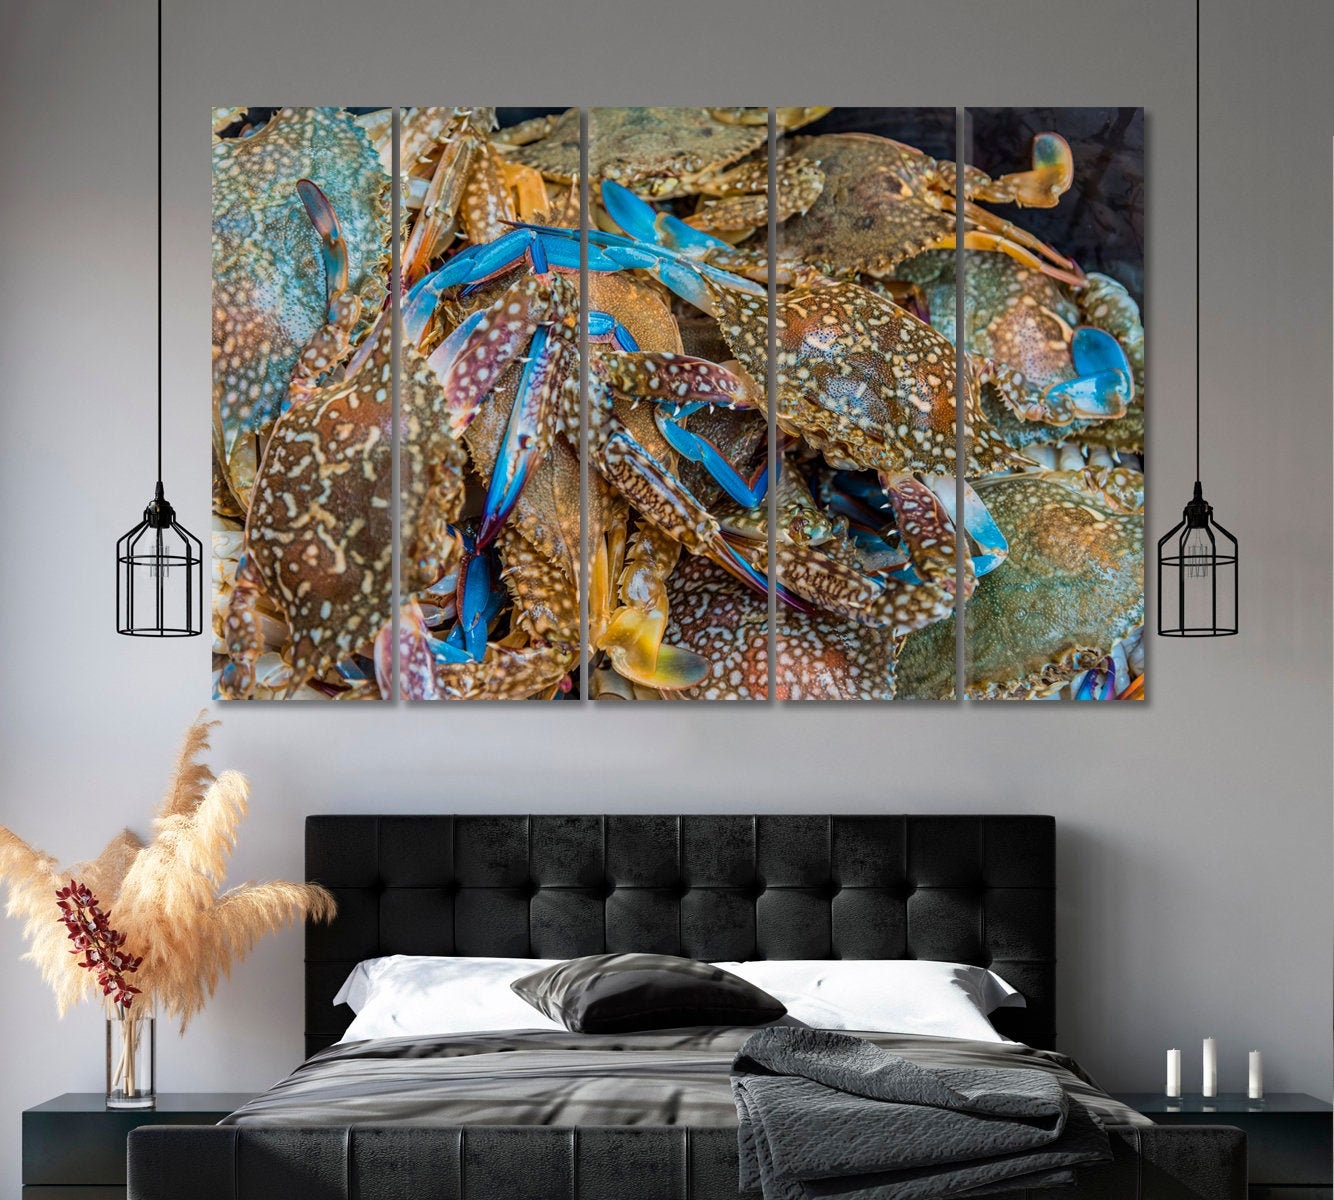 Crab | Large Wall Decor, Crustacean Multi Panels, Canvas Print, Interior Seafood Restaurant Art, Sea Life Art